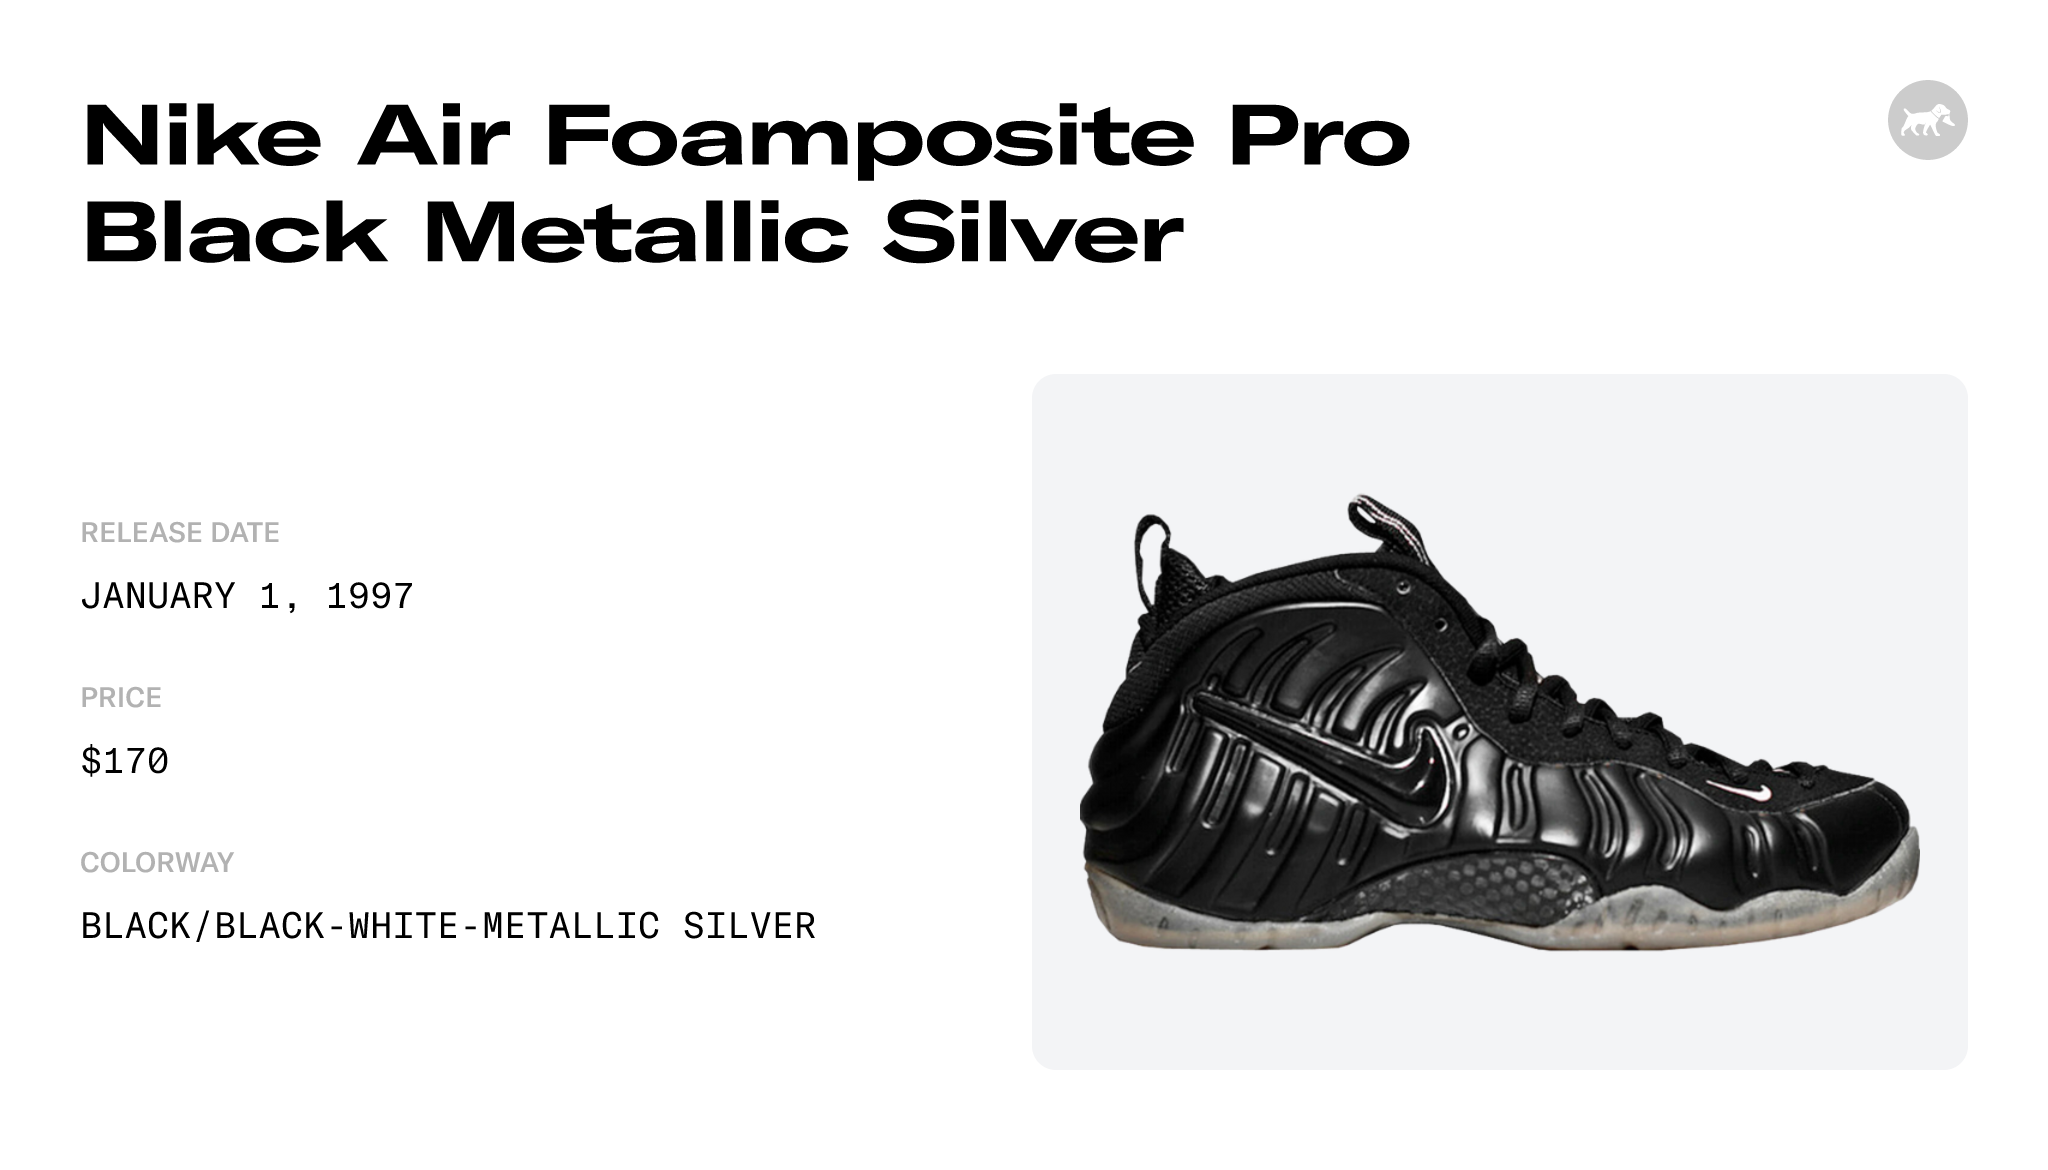 Nike Air Foamposite Pro Black Metallic Silver Raffles and Release Date ...